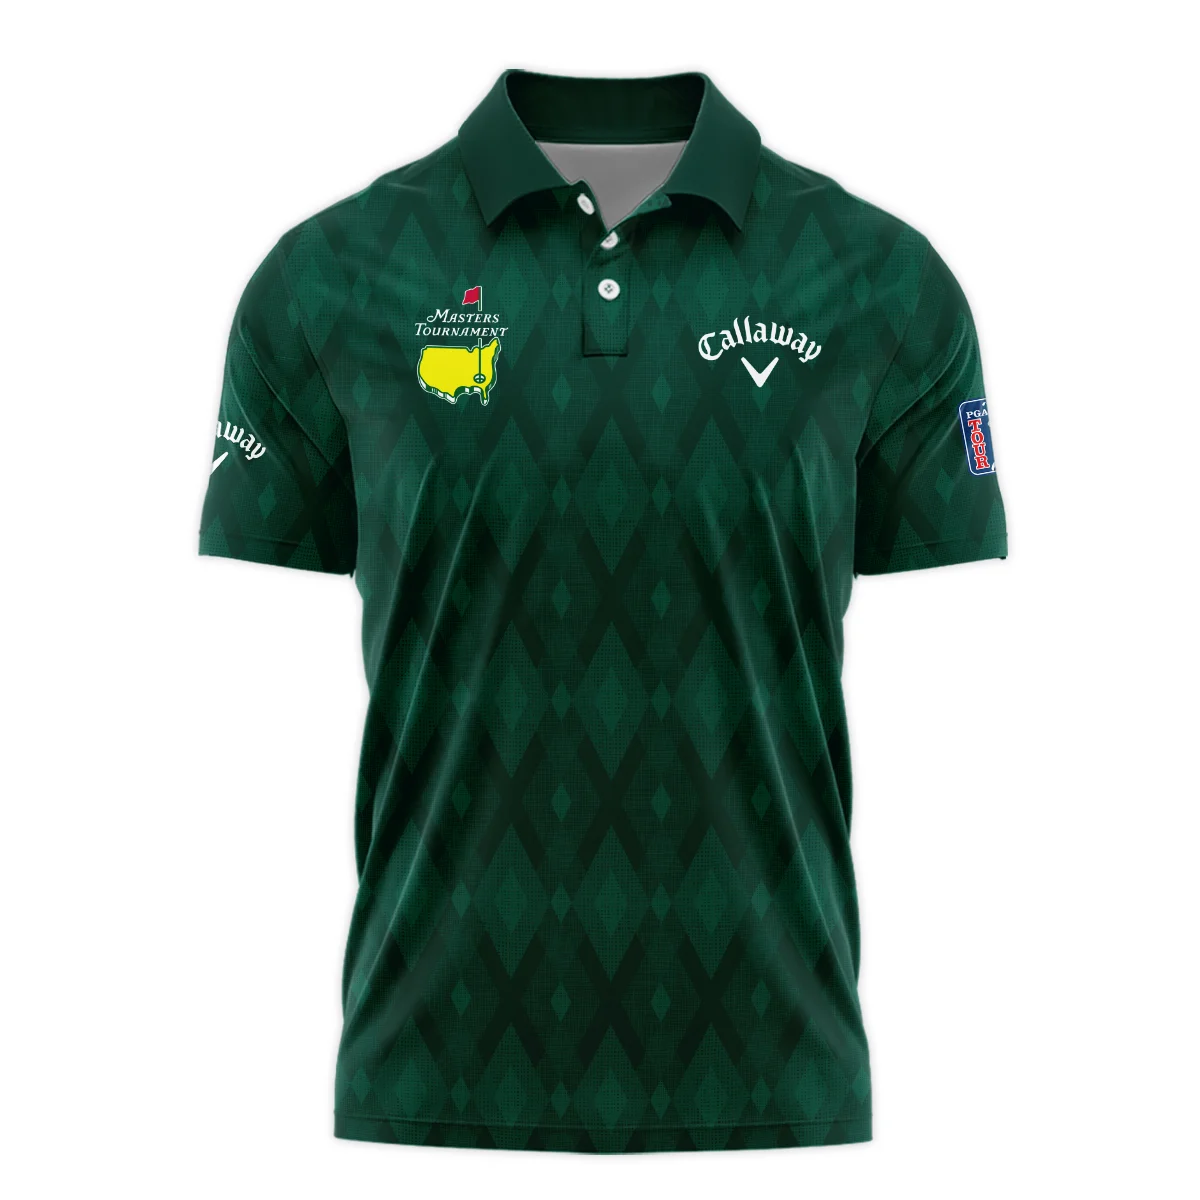 Green Fabric Ikat Diamond pattern Masters Tournament Callaway Polo Shirt Style Classic Polo Shirt For Men